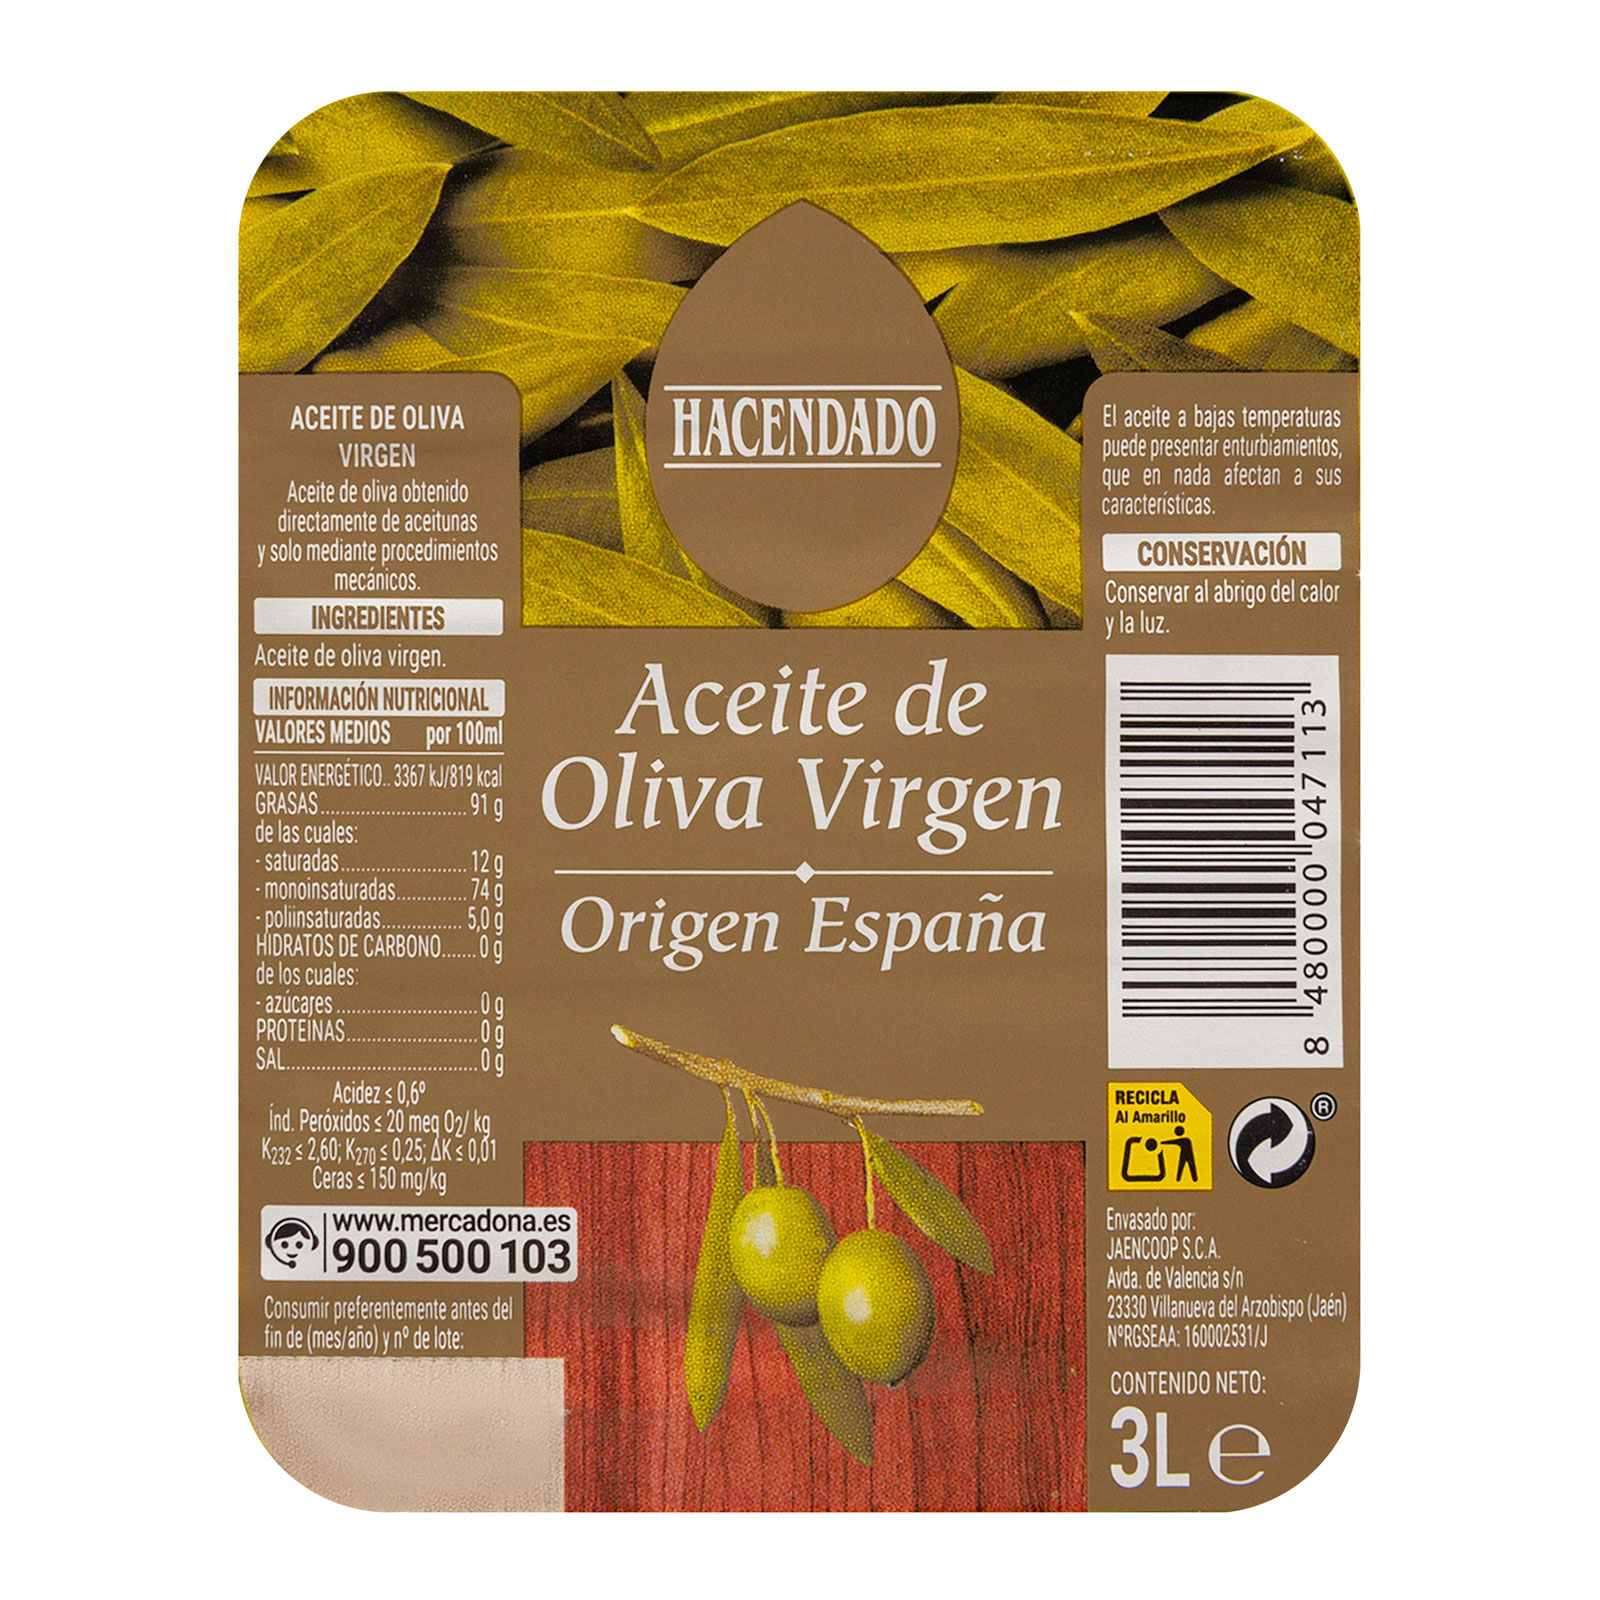 Aceite de oliva virgen garrafa Hacendado